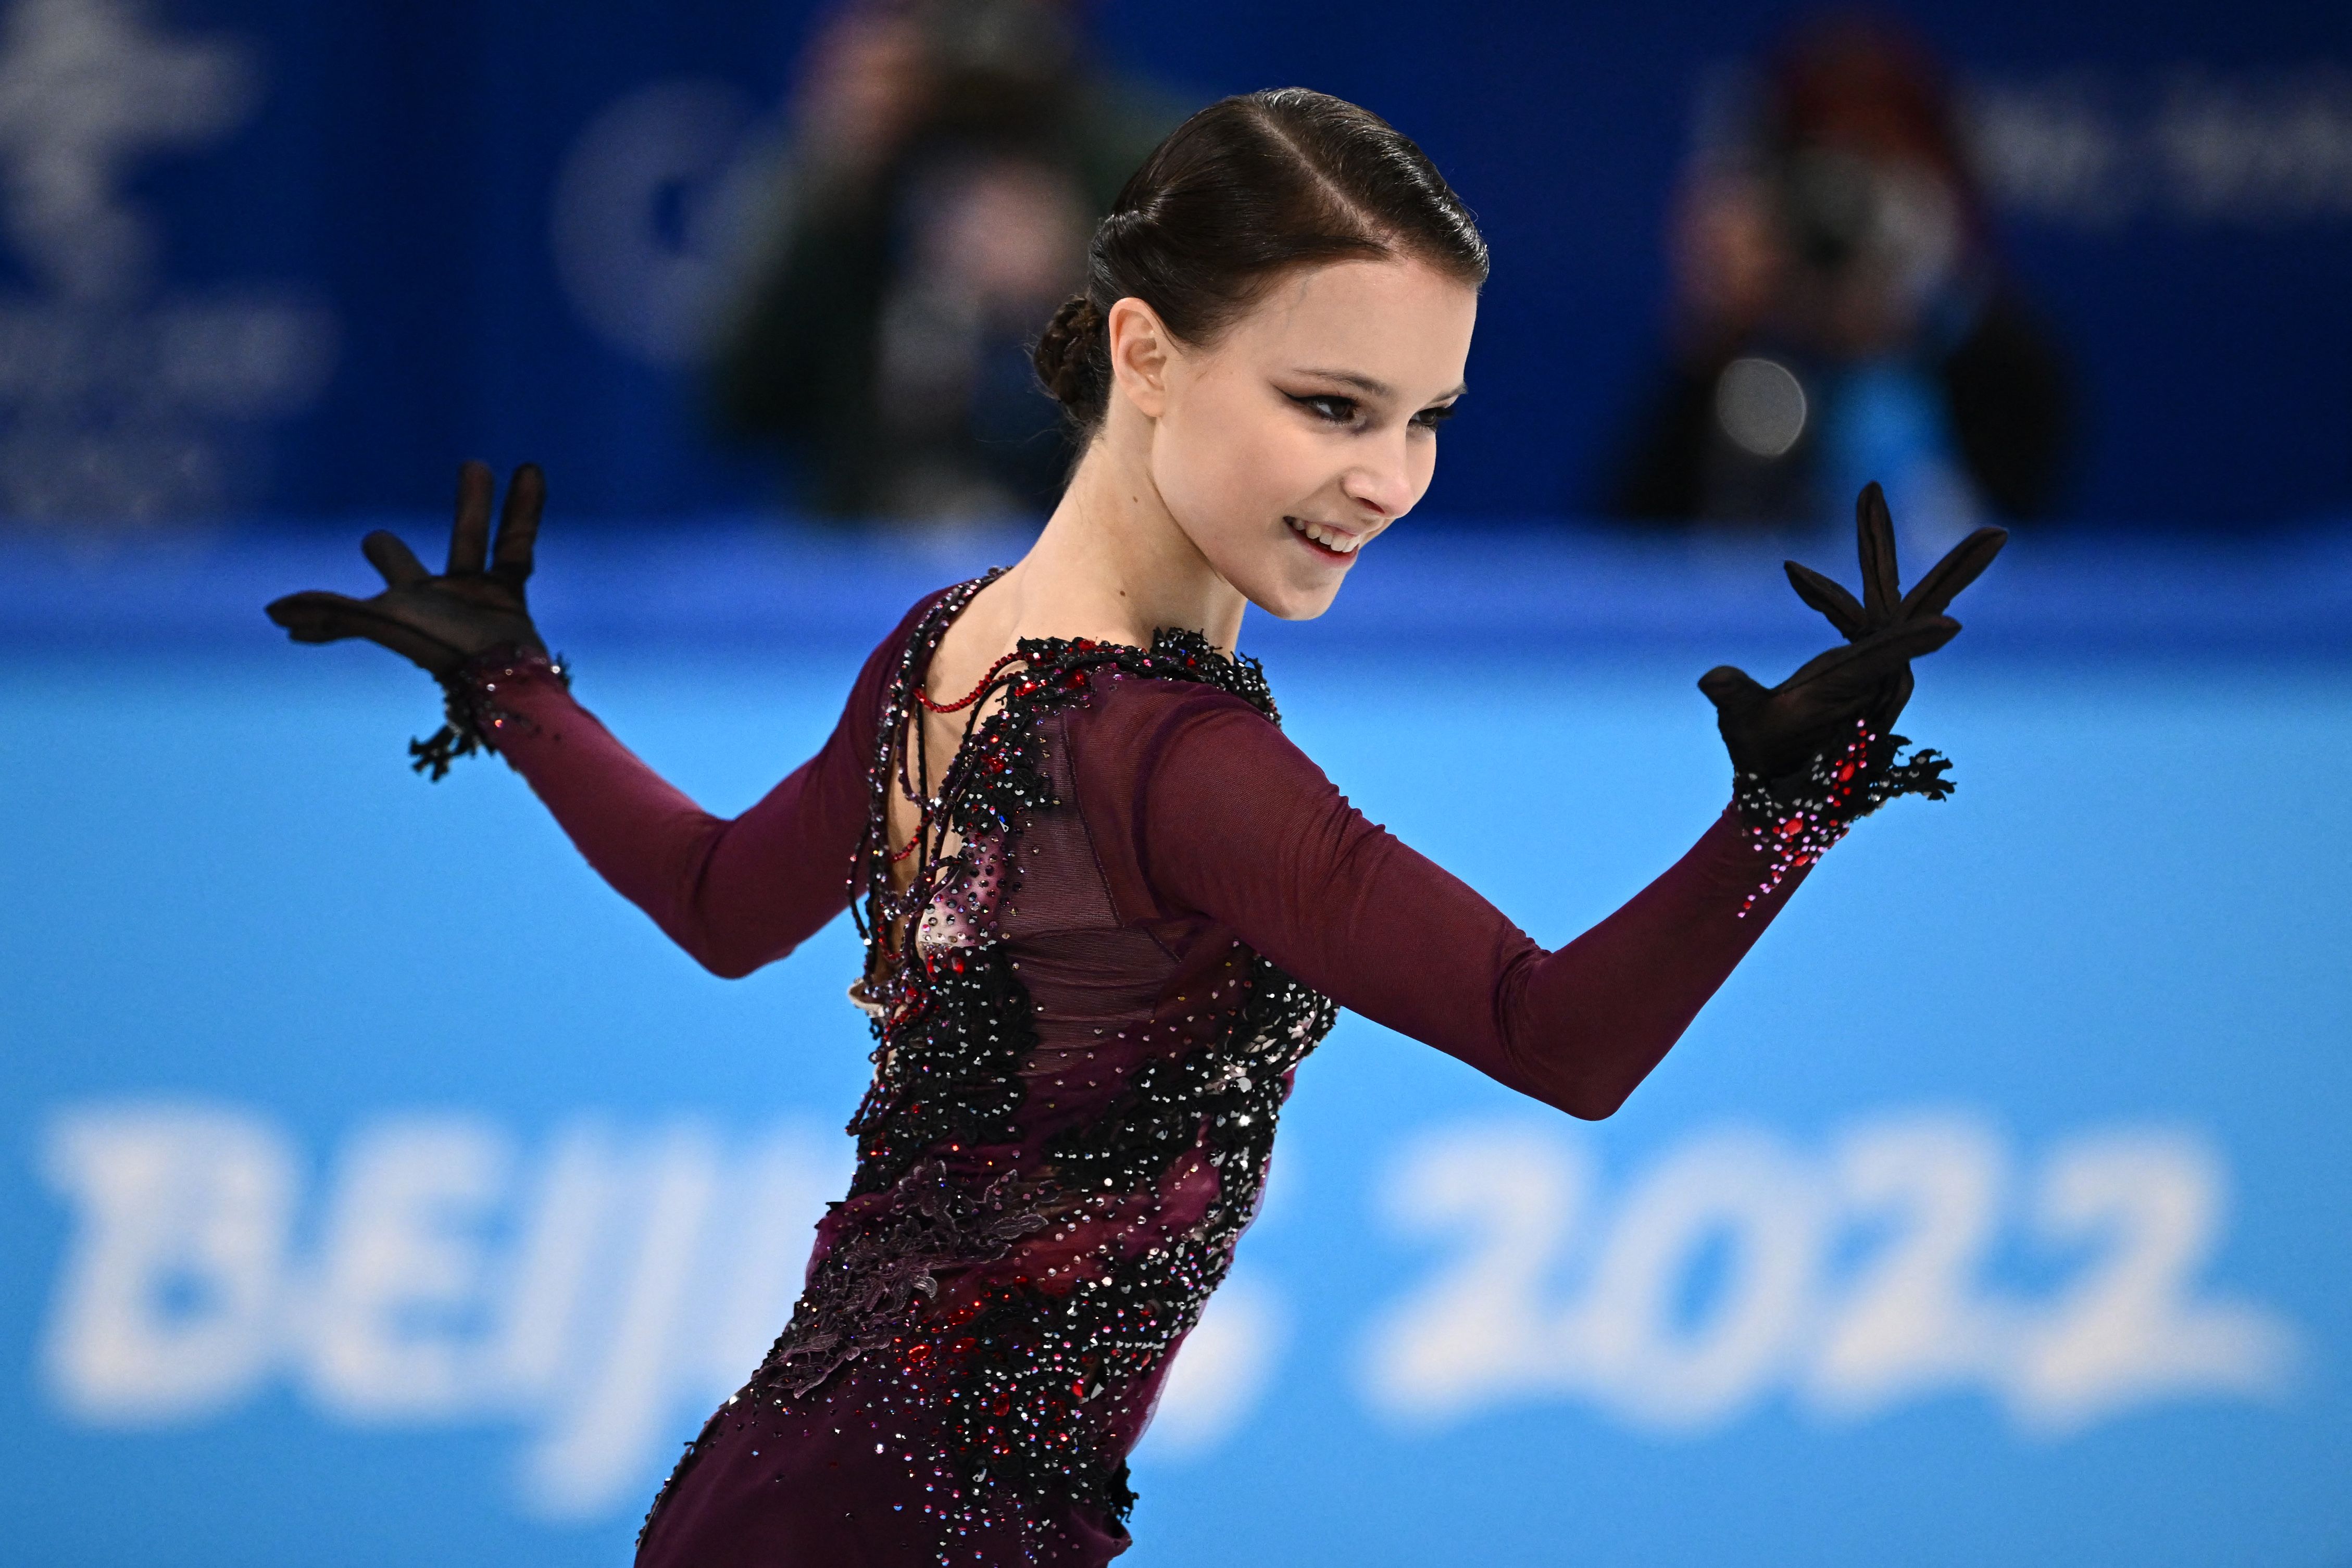 watch womens figure skating olympics 2022